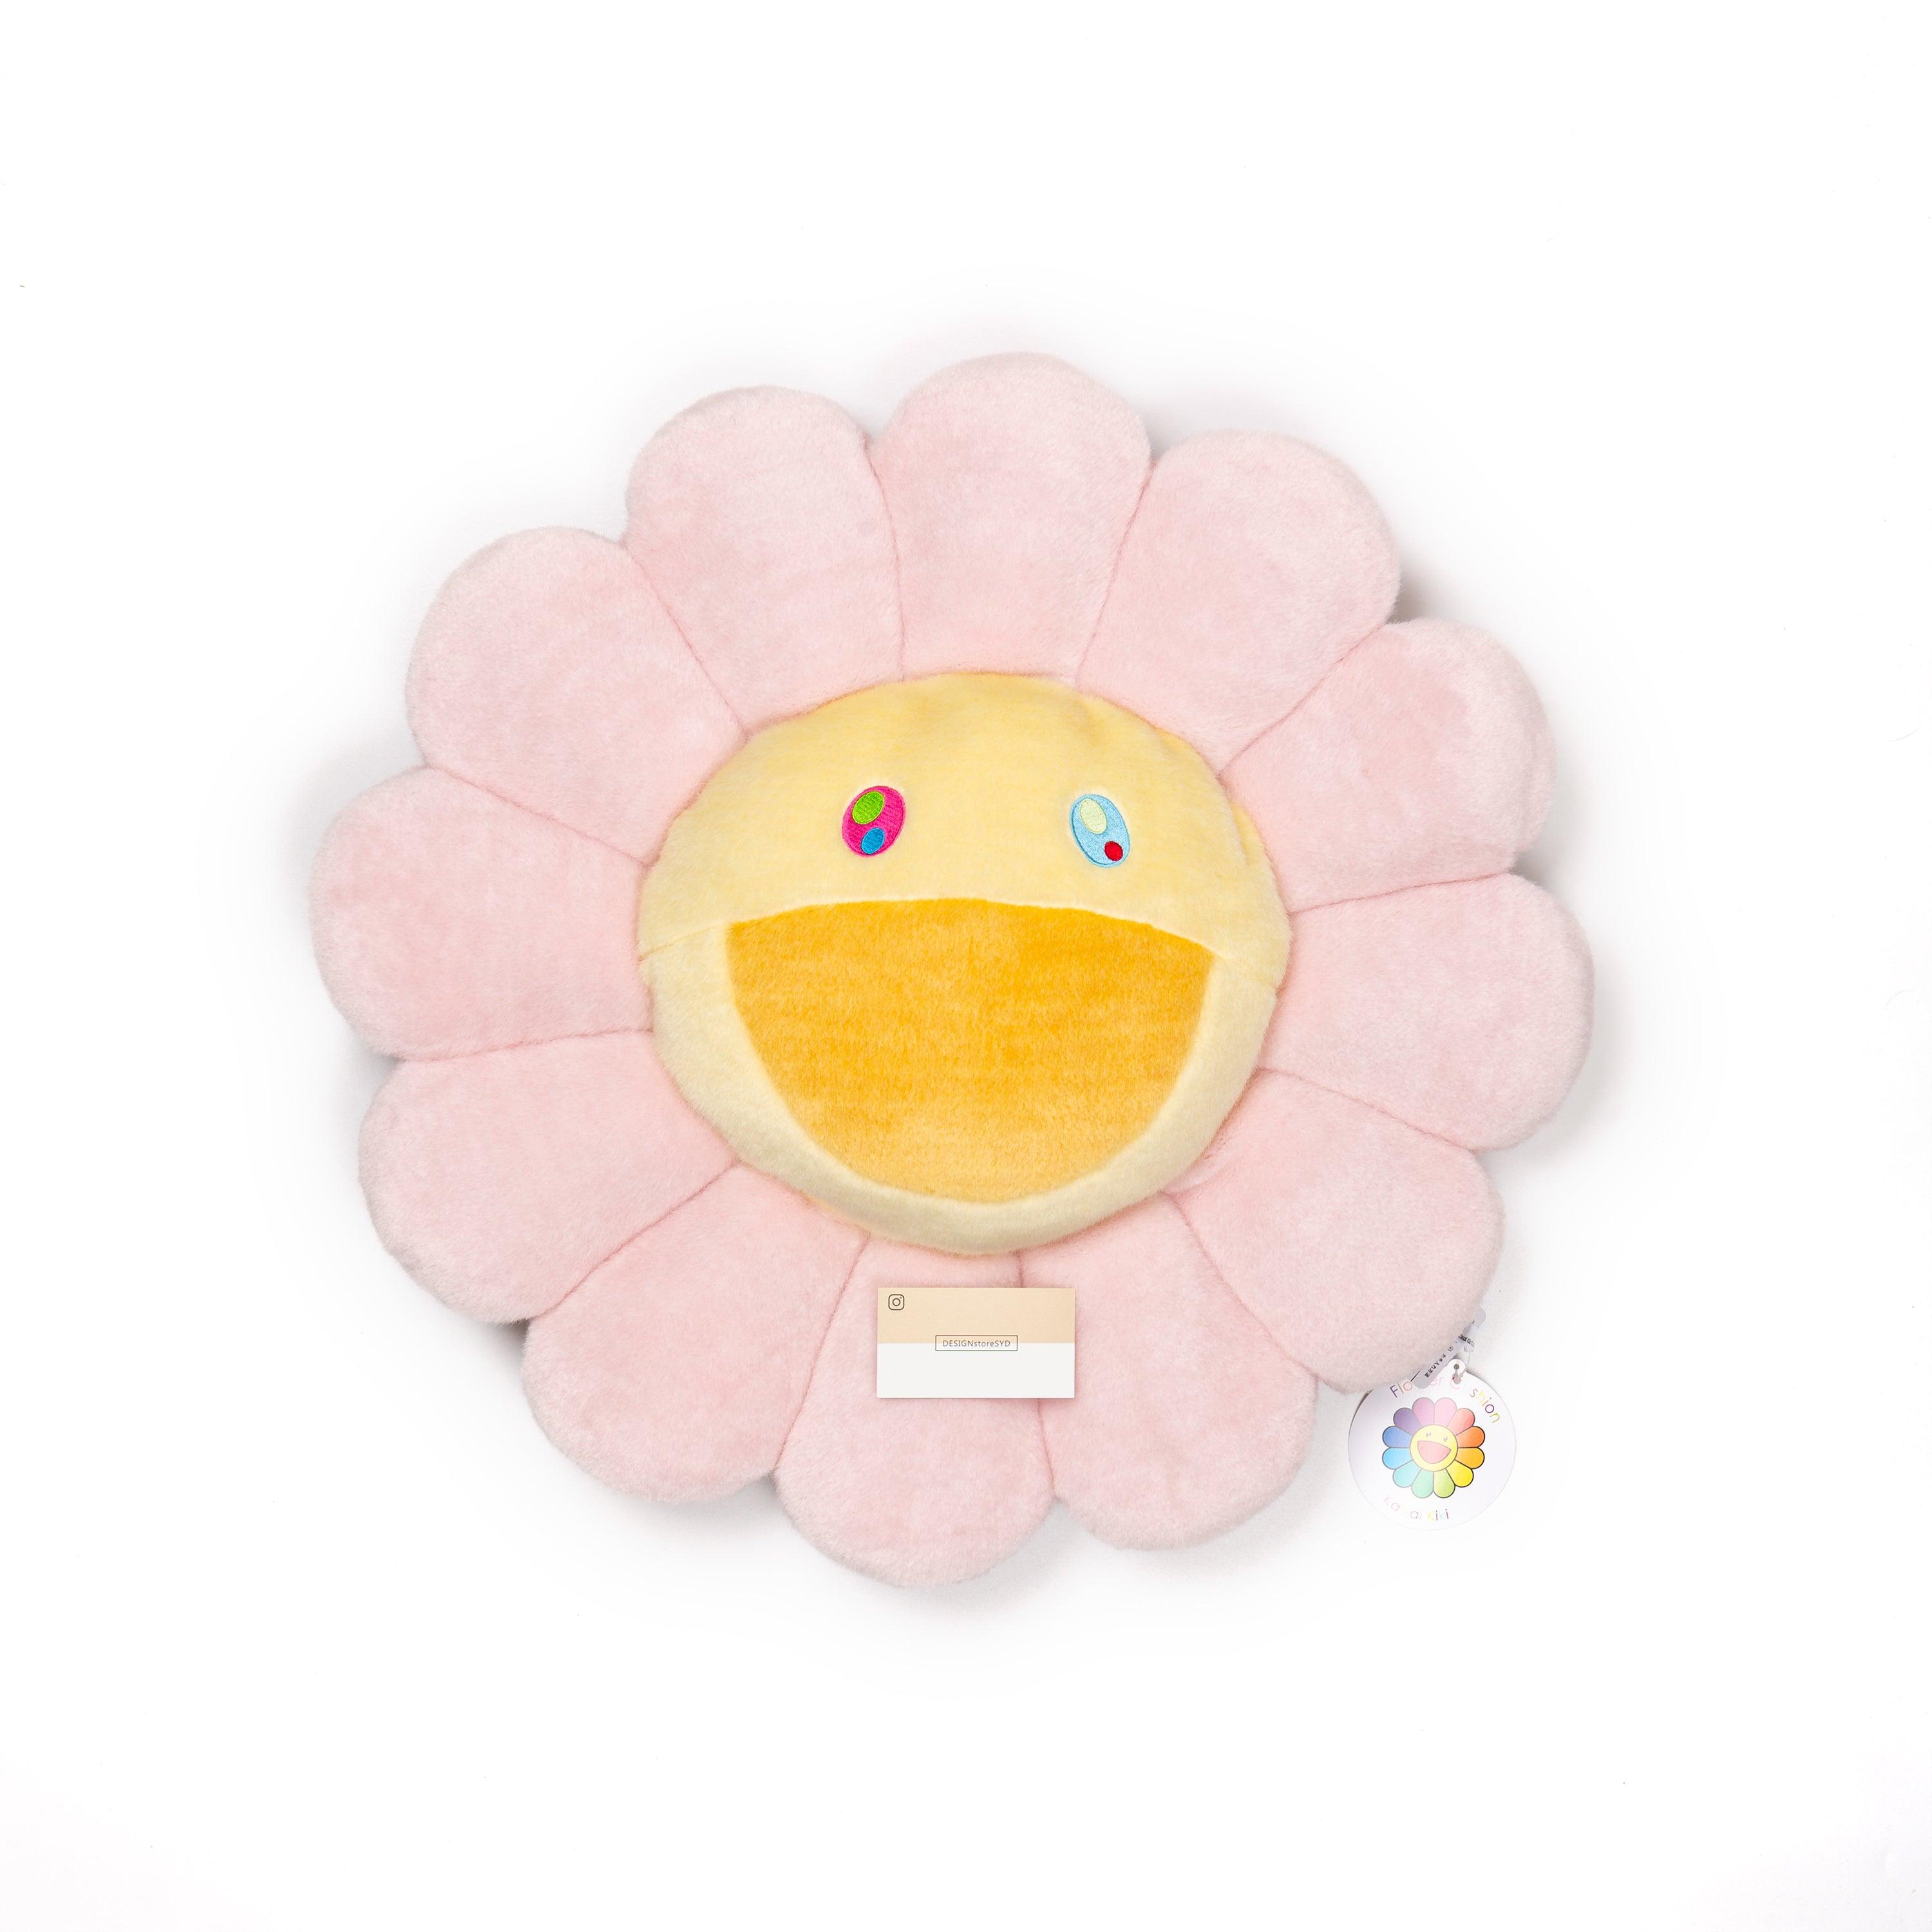 DEBUT SHOW: DESIGNstoreSYD Murakami products - Takashi Murakami Flower Pillow  Cushion White